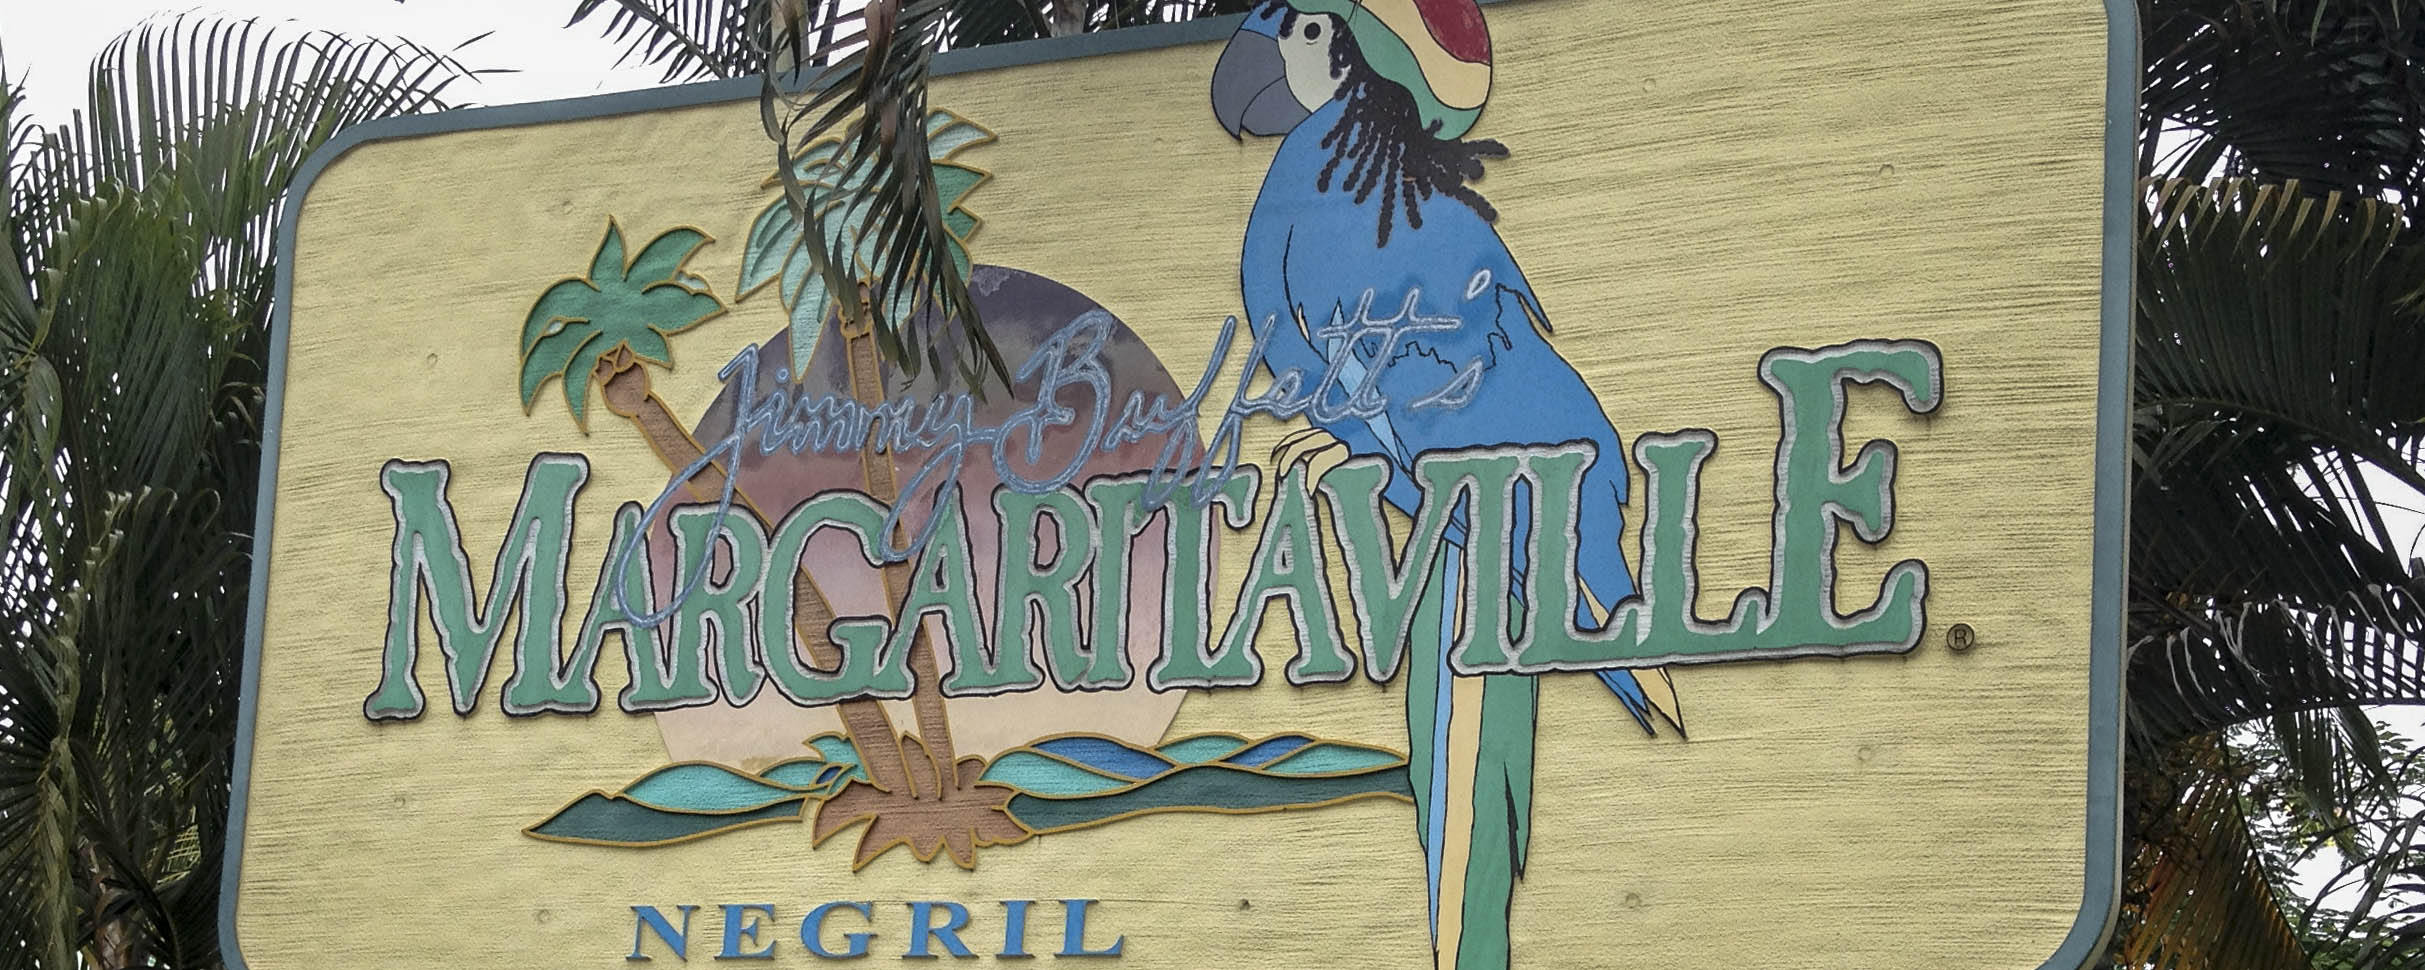 Margaritaville, Norman Manley Boulevard, Negril Jamaica